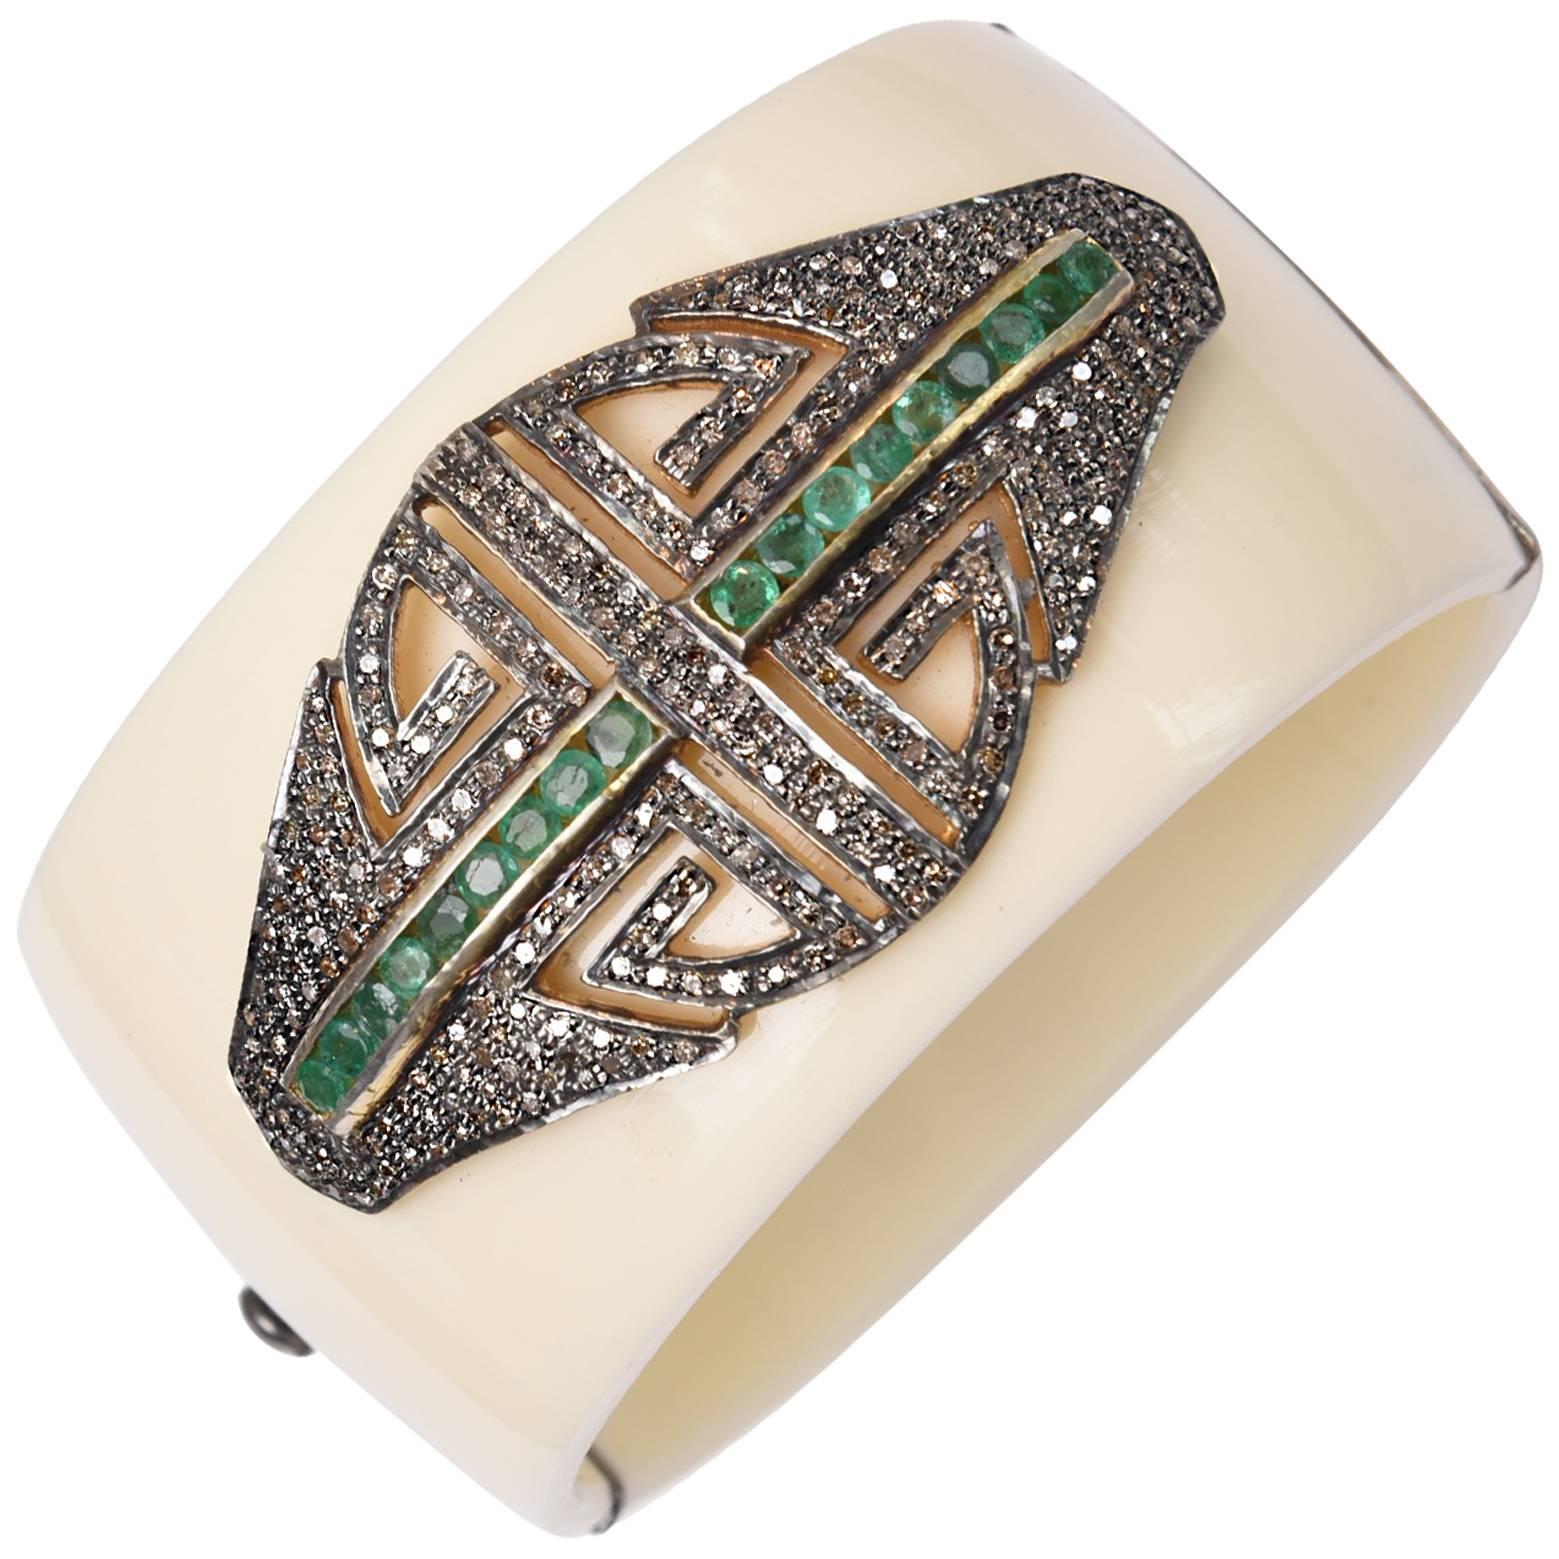 Diamonds and Emeralds on Bakelite Cuff bracelet 